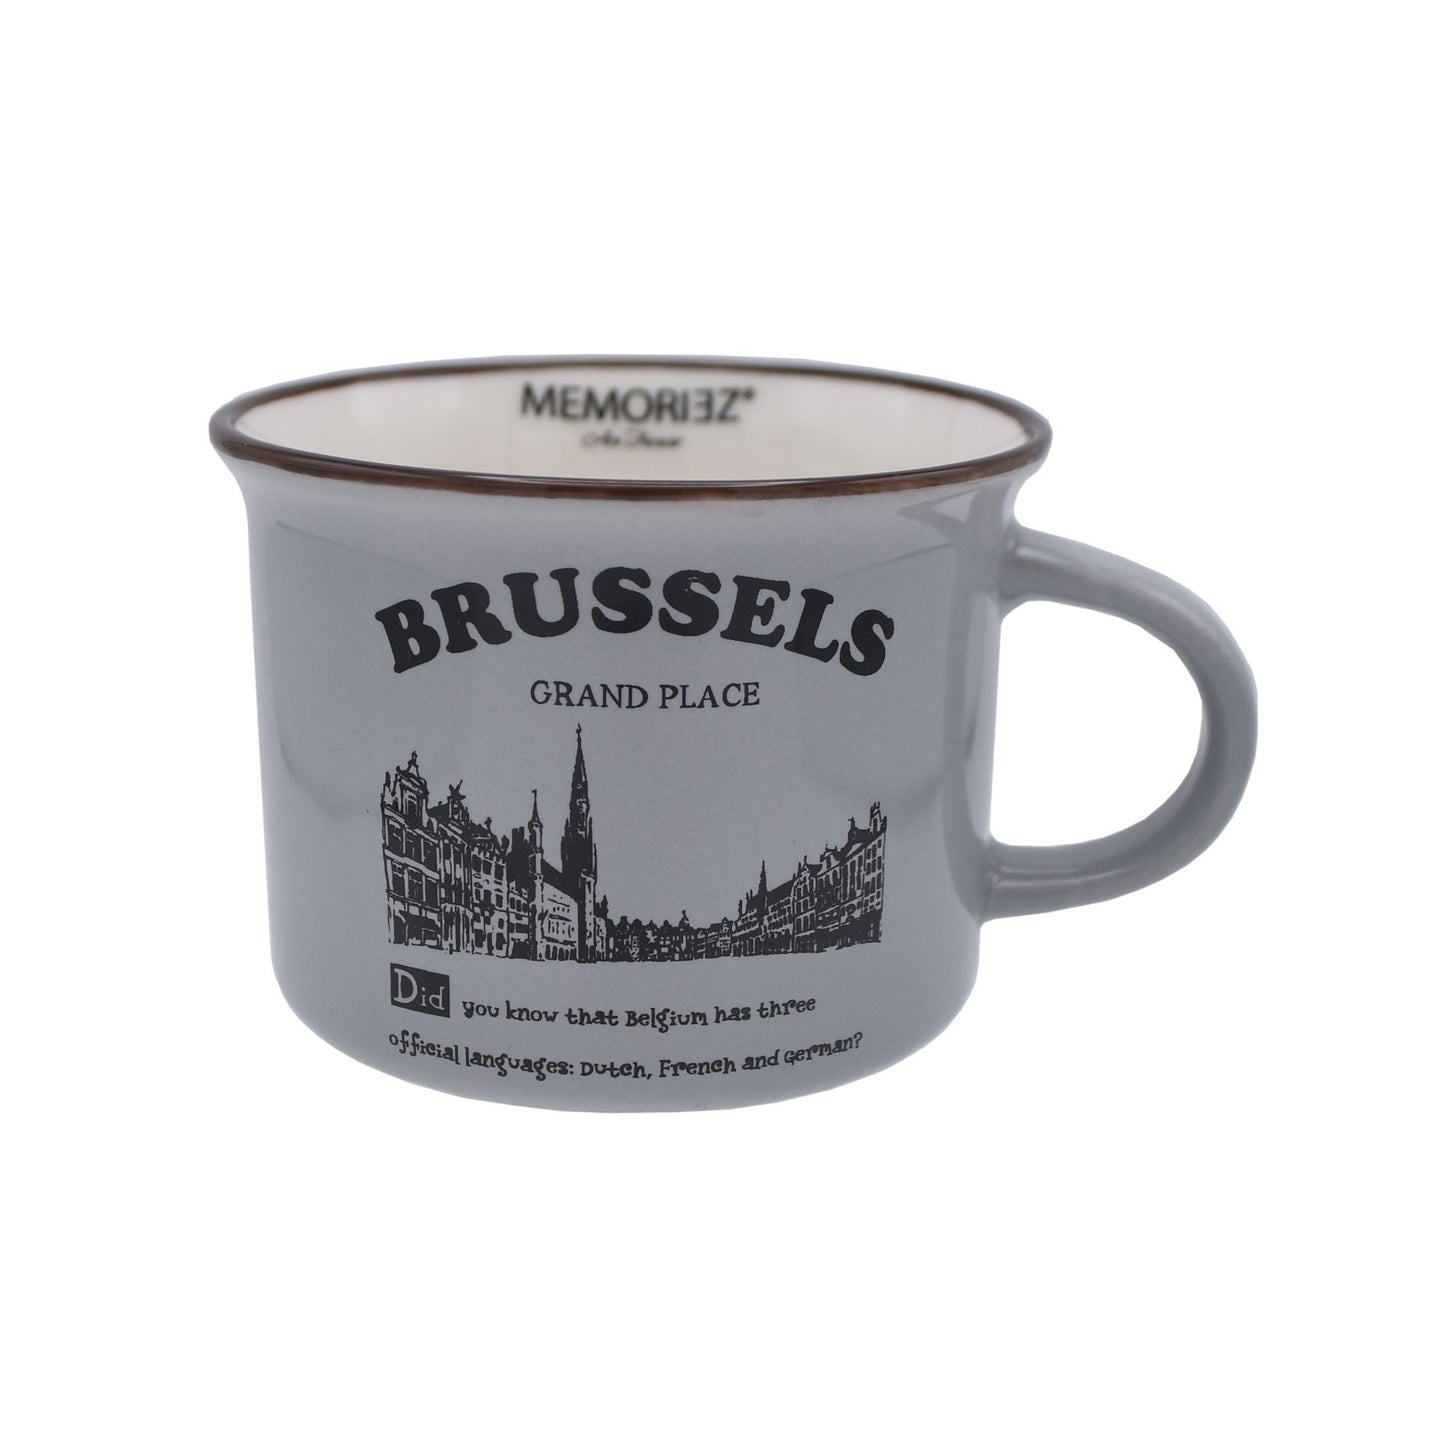 Story mug small  - Brussels - Grand place